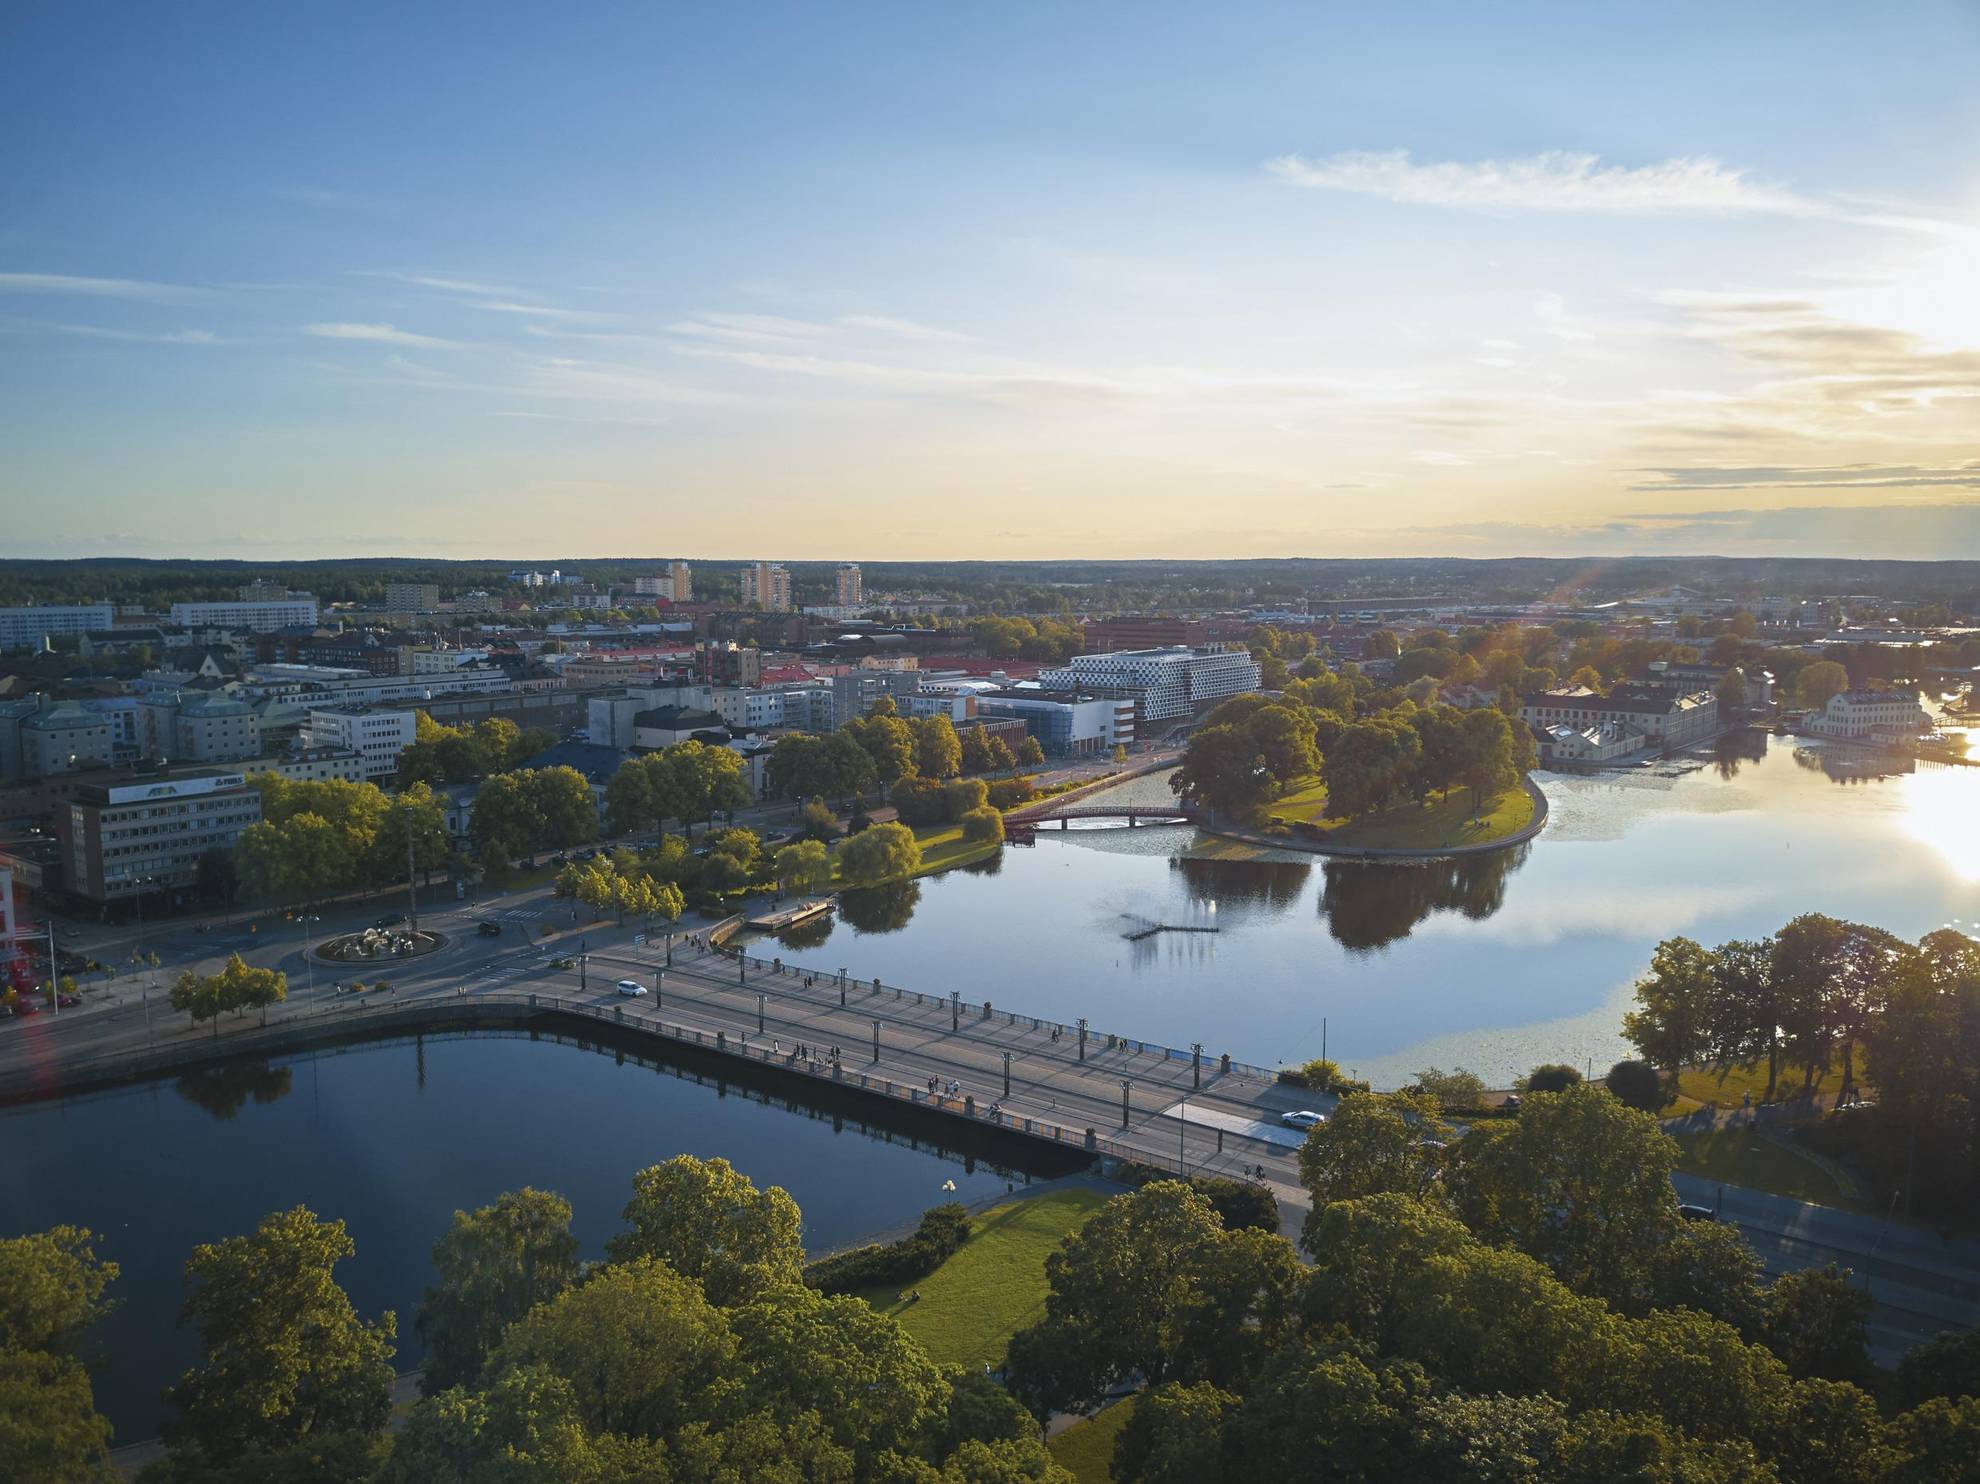 Aerial view of Eskilstuna city. A bridge crosses the river Eskilstunaån to the city centre.